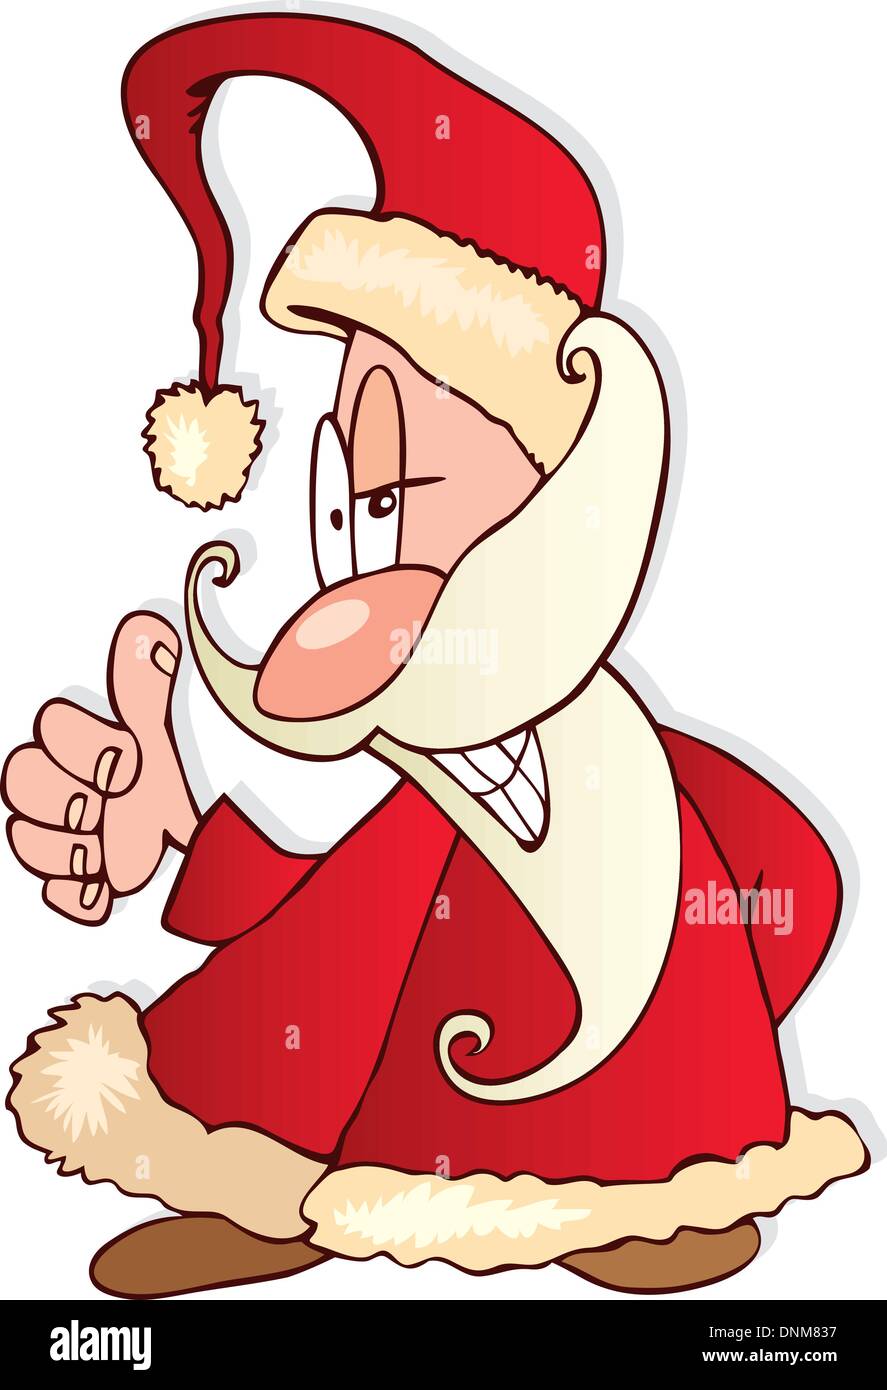 Cartoon Illustration Of Cheerful Santa Claus Stock Vector Image And Art Alamy